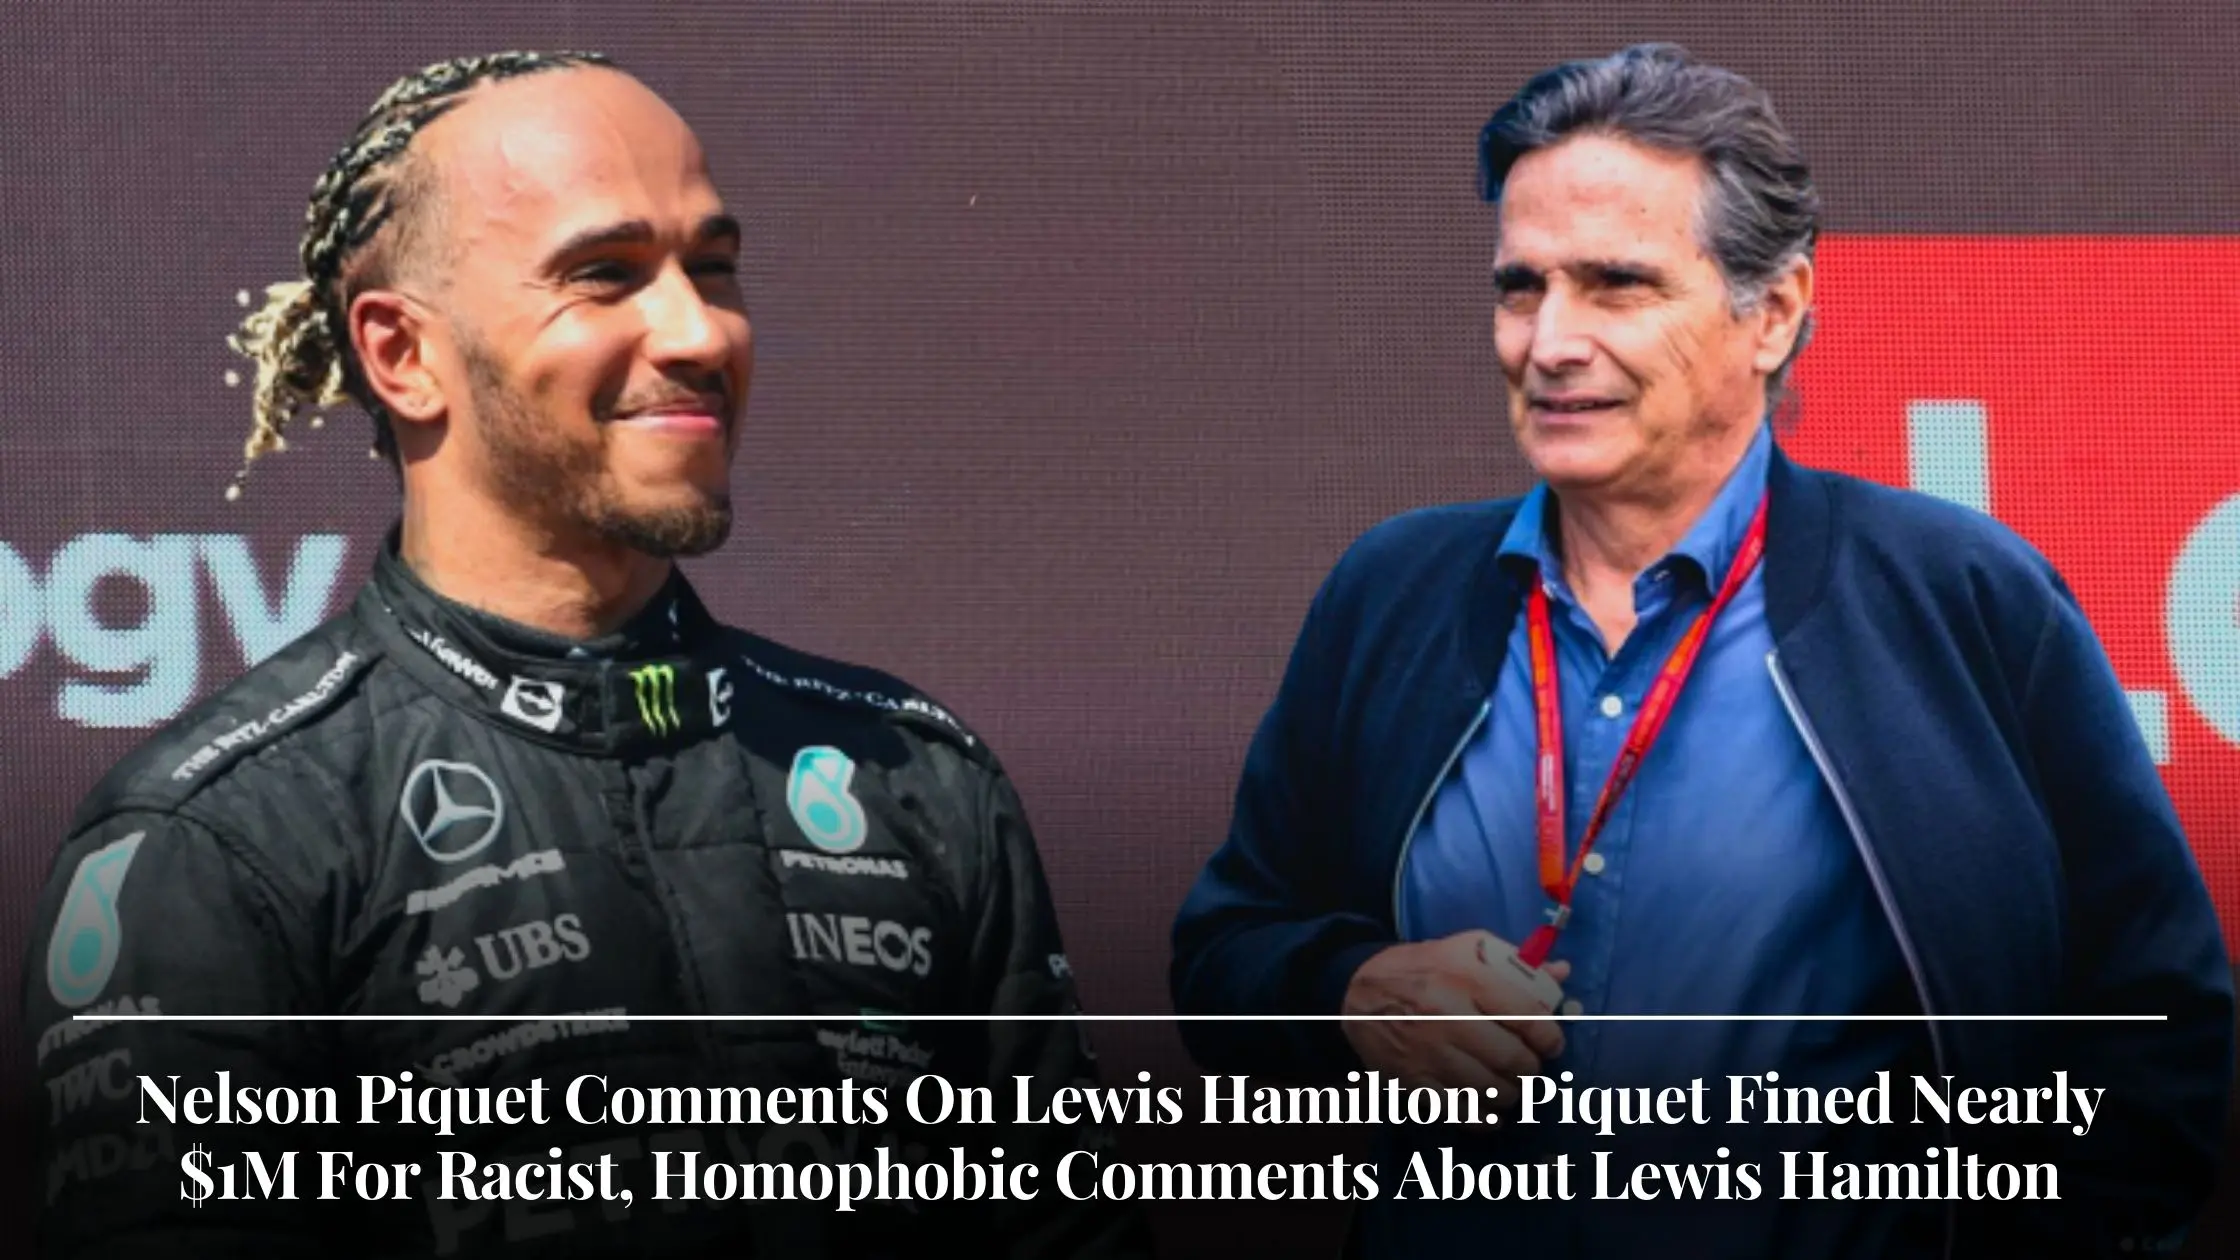 Nelson Piquet Comments On Lewis Hamilton Piquet Fined Nearly $1M For Racist, Homophobic Comments About Lewis Hamilton